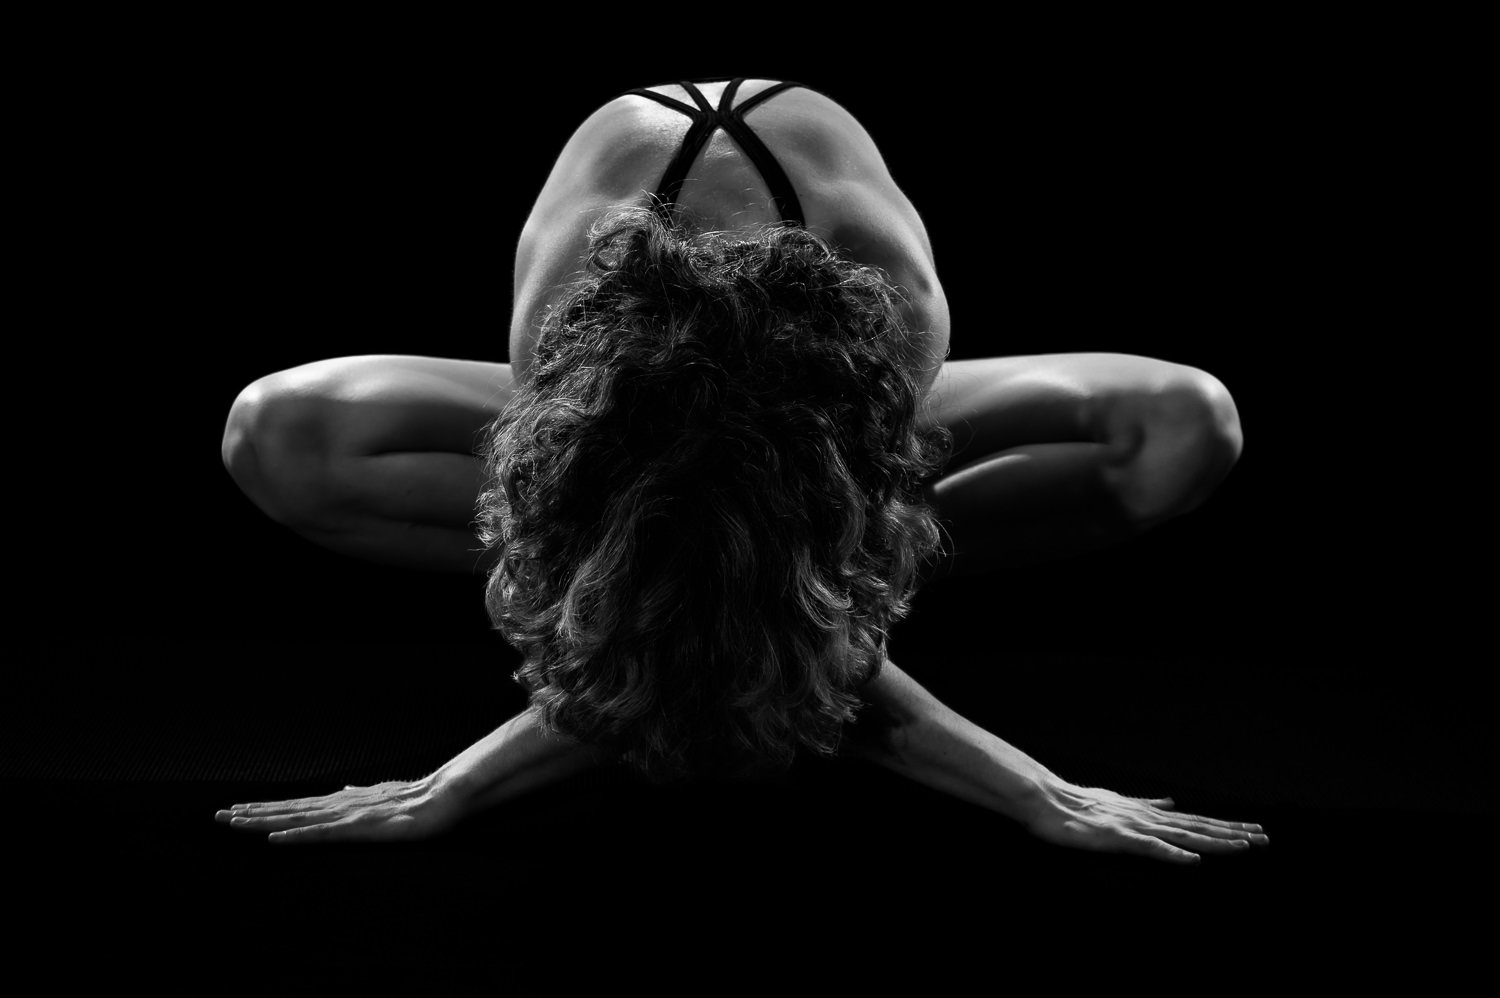 yoga-puurboudoir-artistiek-moody-zwart-wit-cfoto-caroline-12.jpg